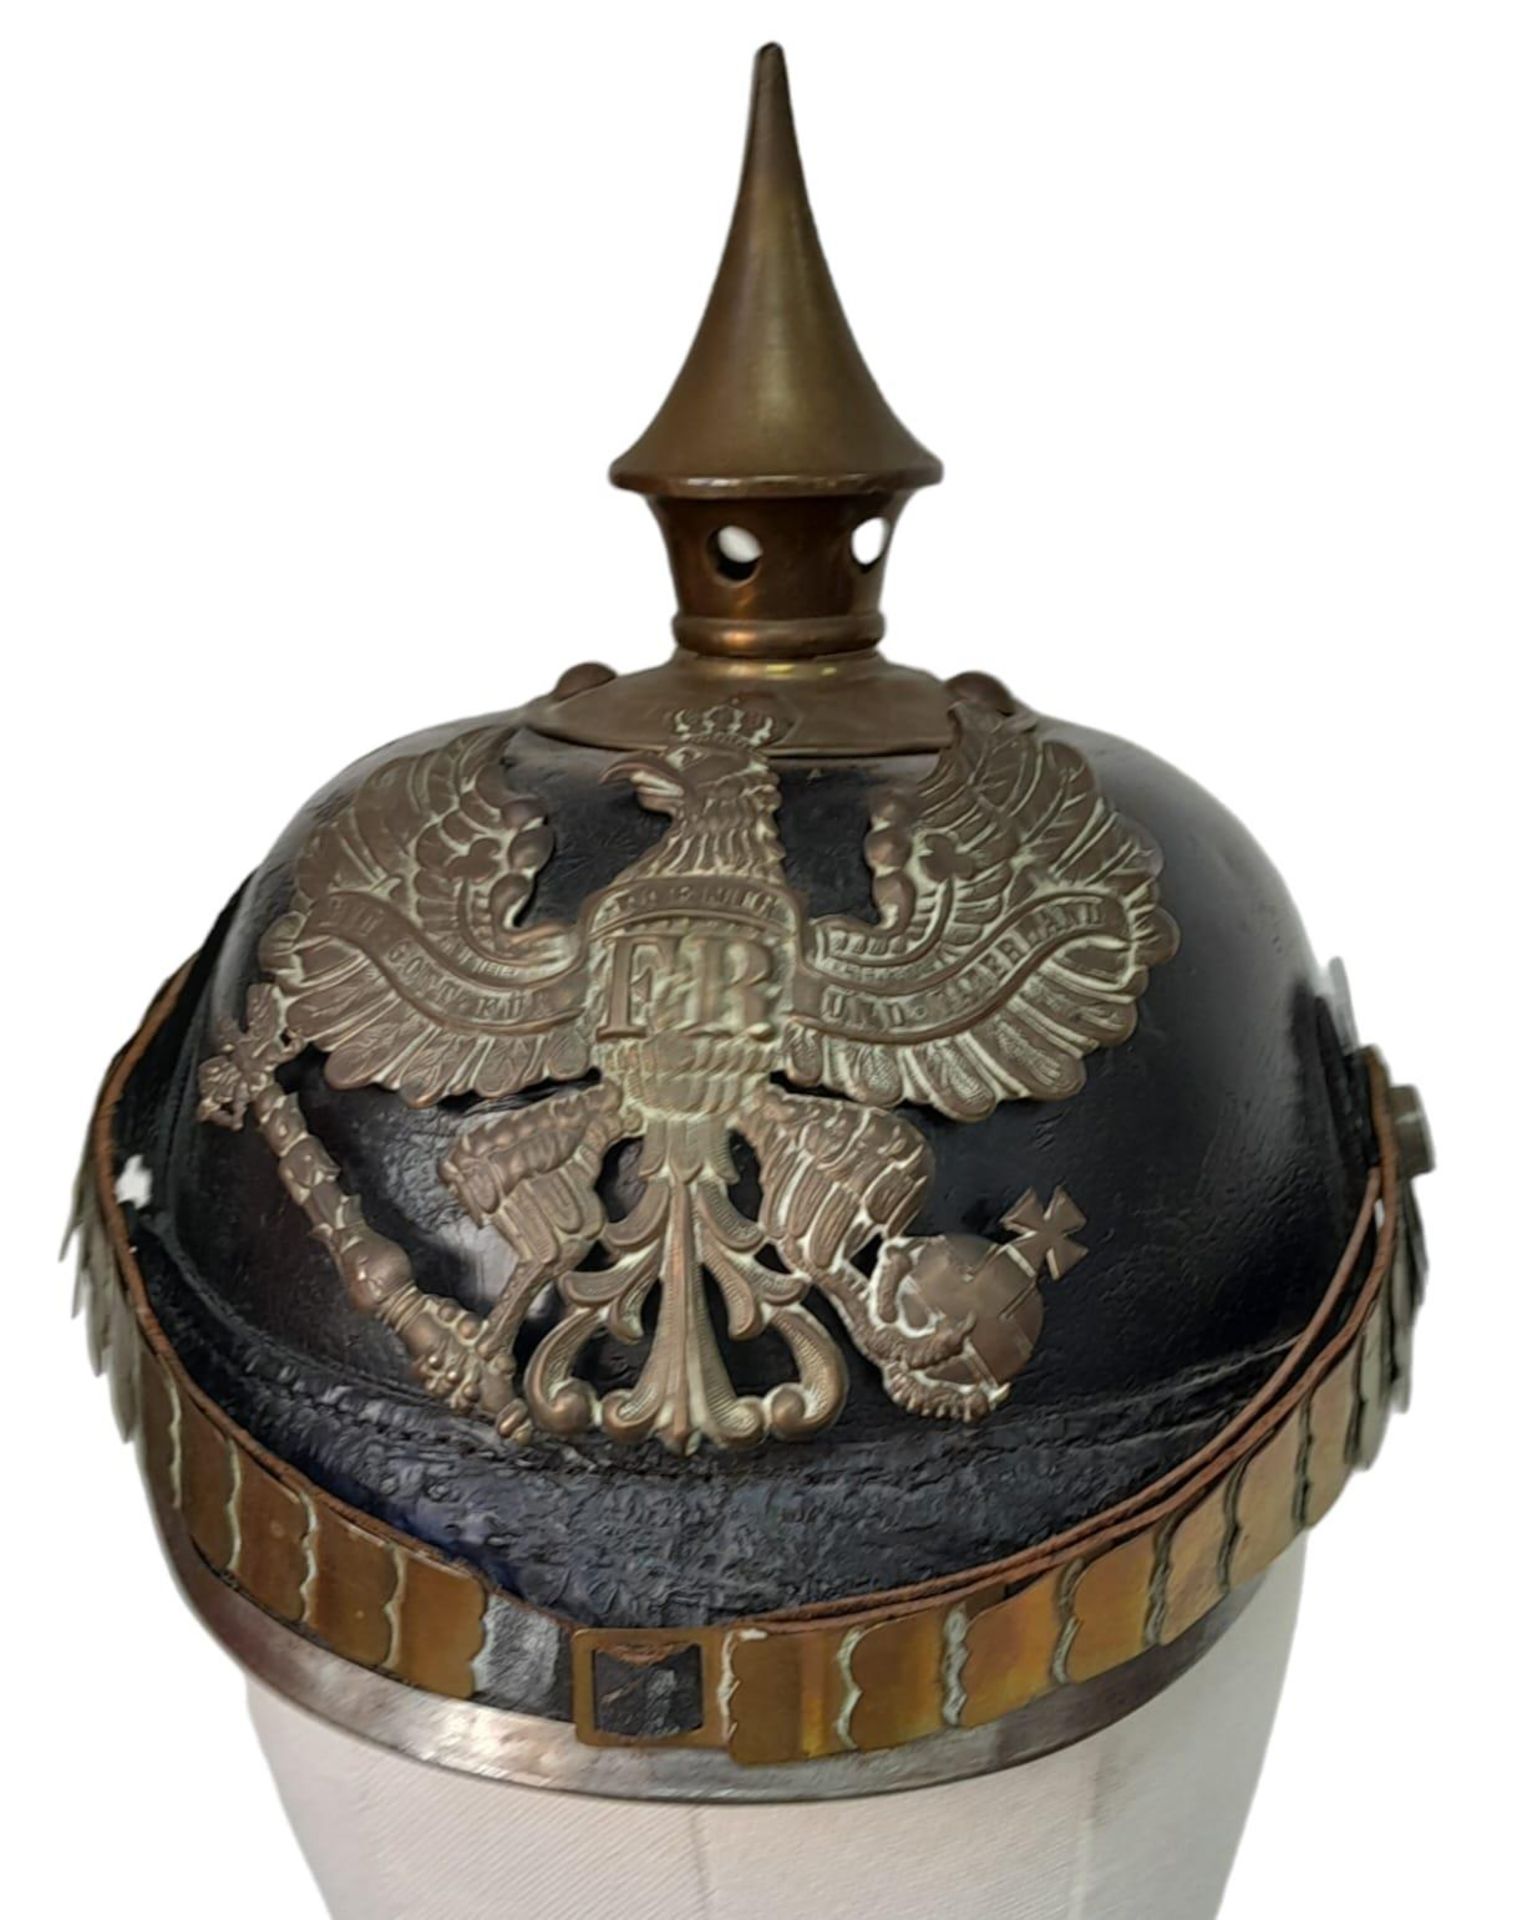 WW1 Prussian Nco’s Pickelhaube Spiked Helmet.